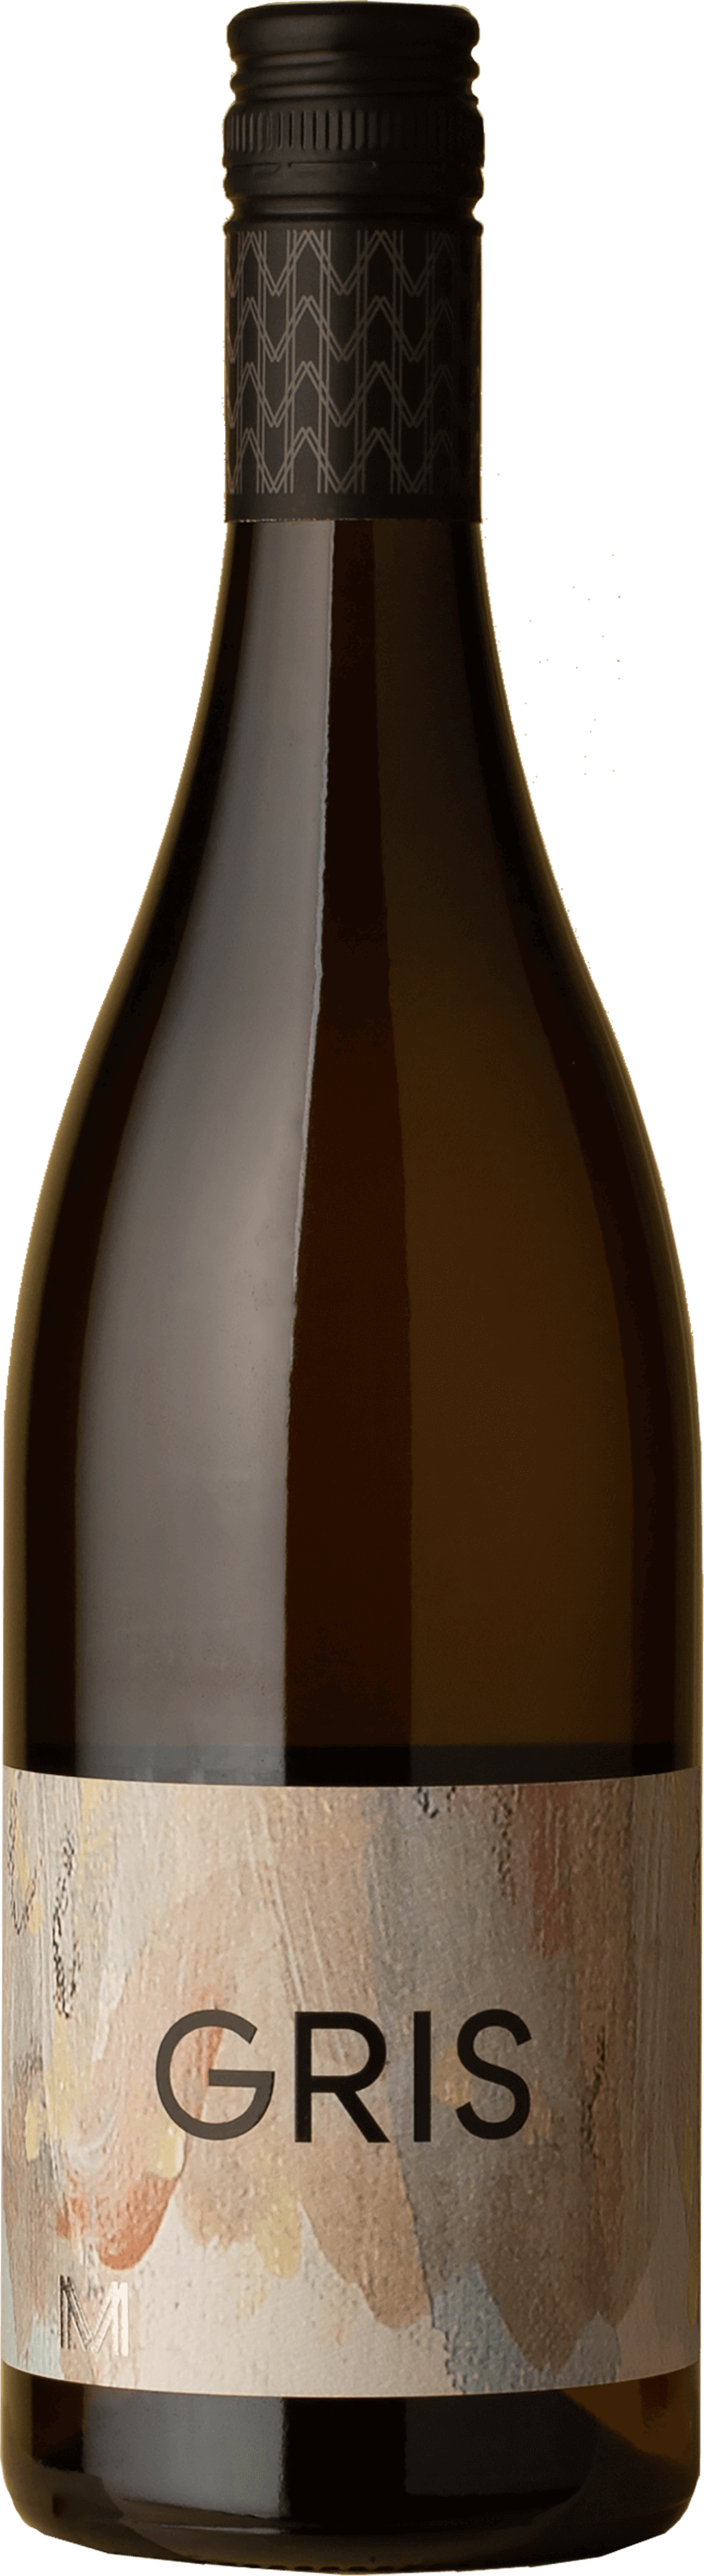 Mulline - Gris Pinot Gris 2021 Orange Wine